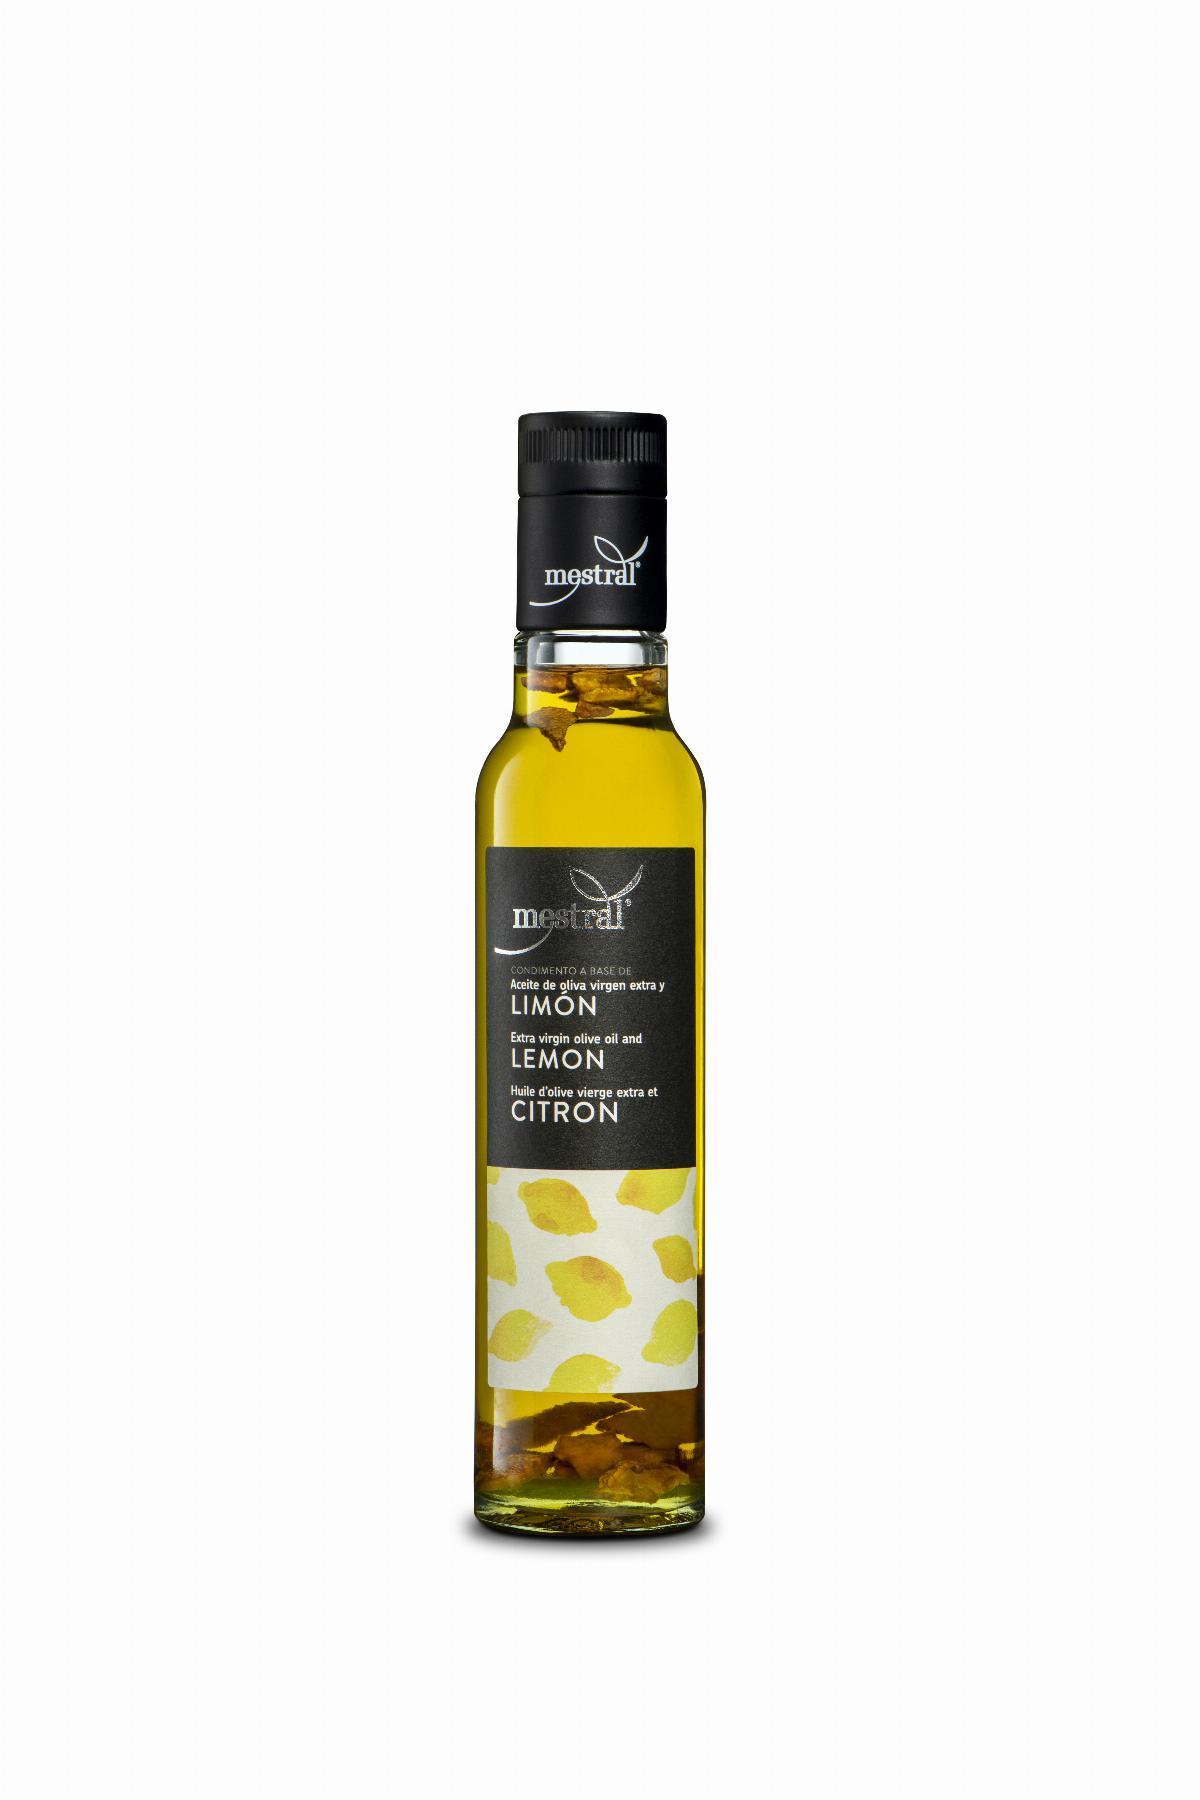 Aceites y Condimentos - Oli d'Oliva Verge Extra Mestral amb Llimona, ampolla Dòrica transparent, 250ml, ES-EN-FR - Mestral Cambrils